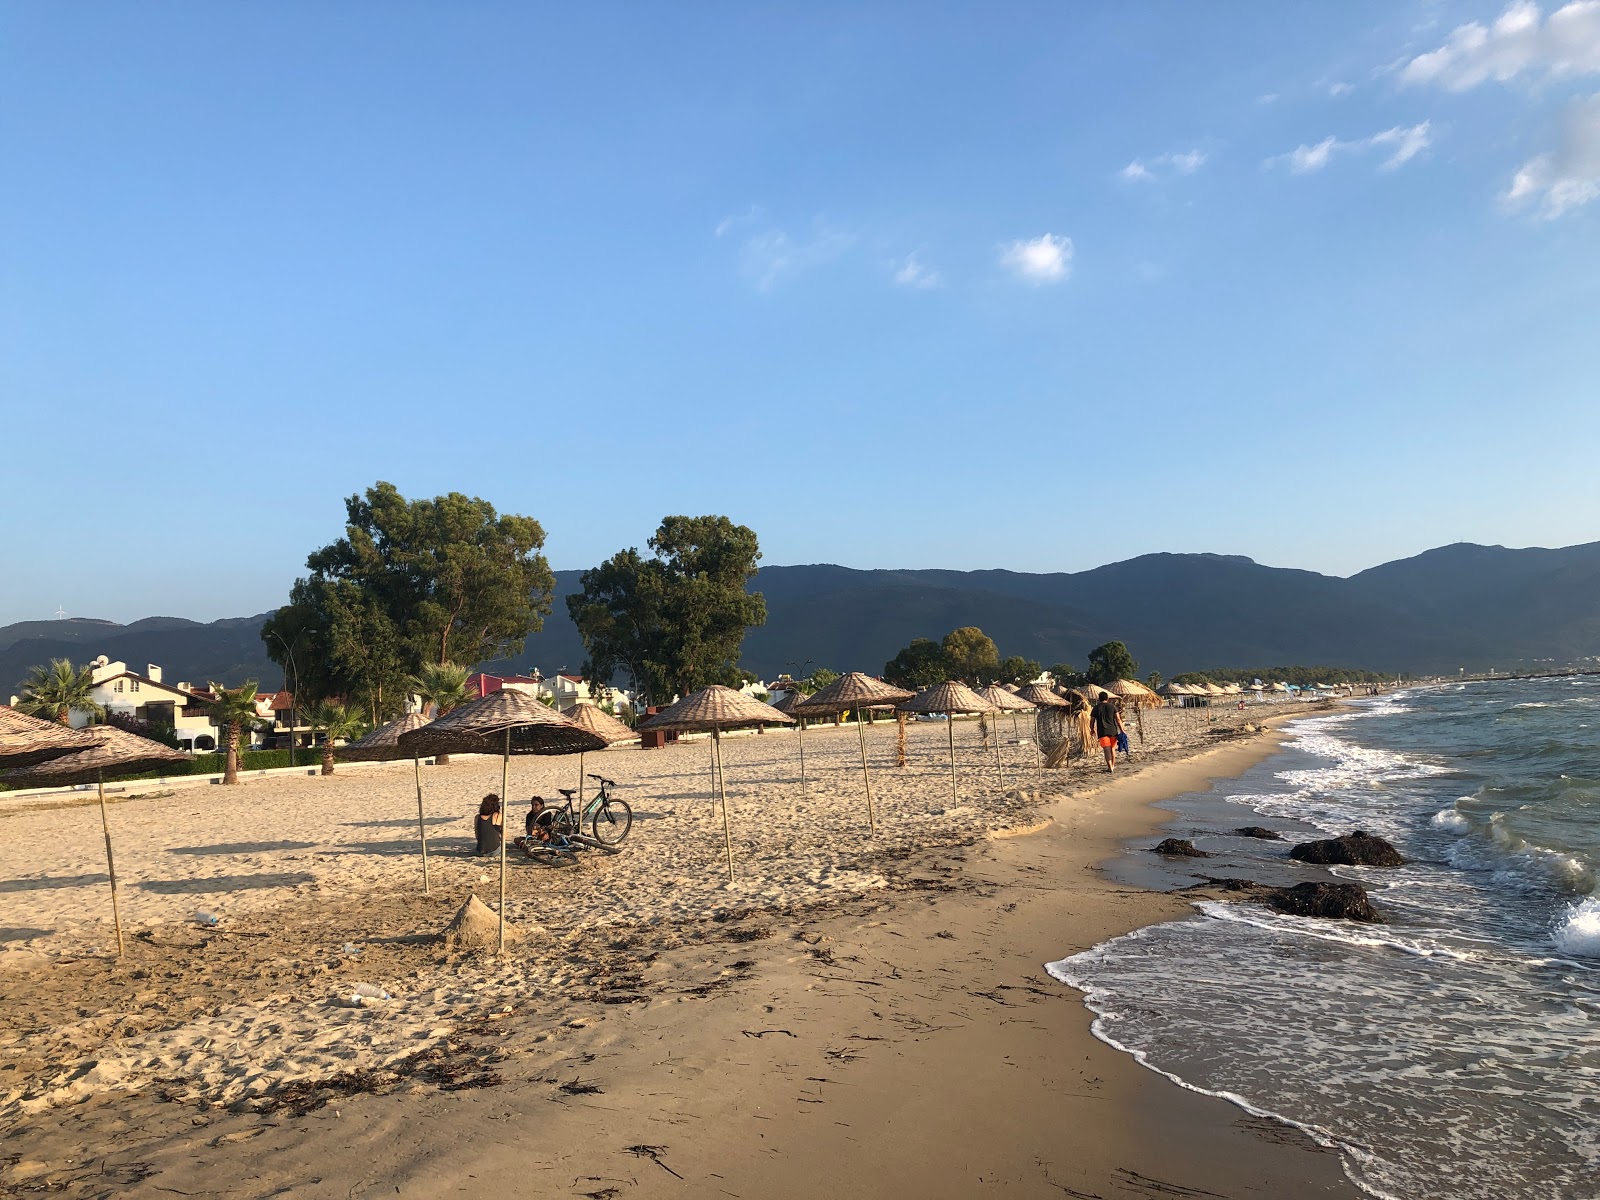 Photo of Sevgi Plaji beach resort area